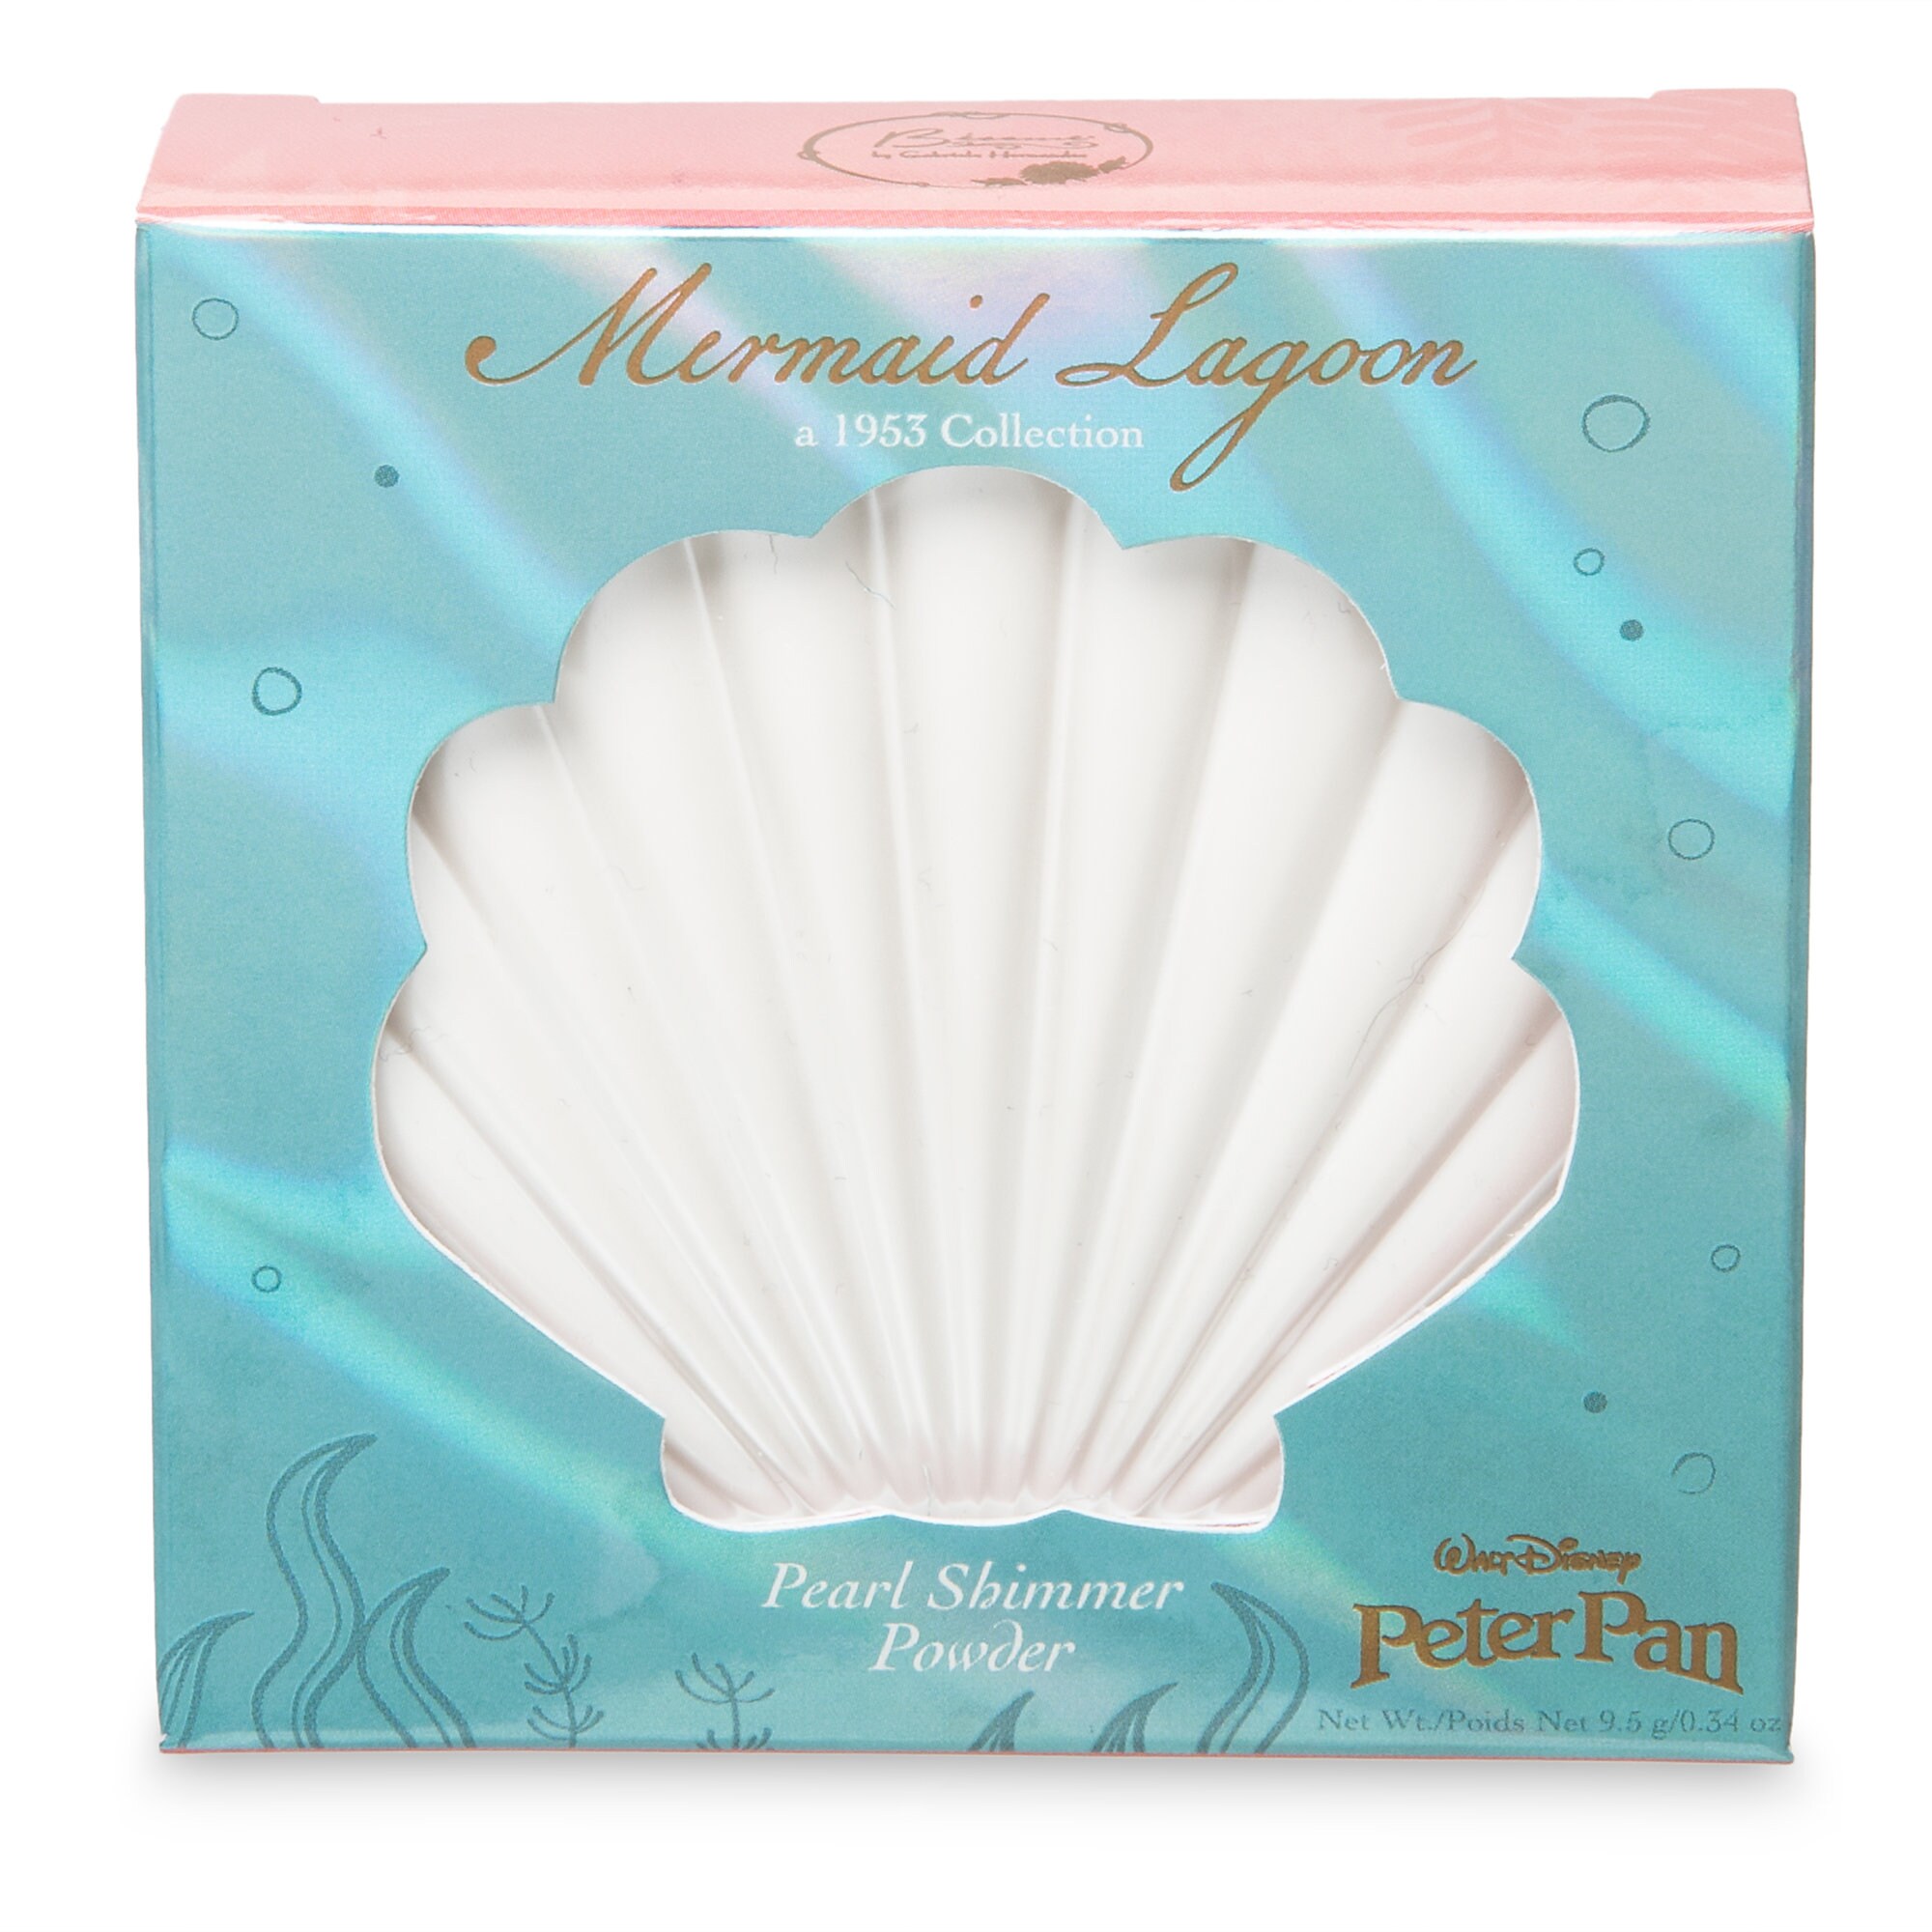 Peter Pan Mermaid Lagoon Pearl Shimmer Powder Compact by Bésame